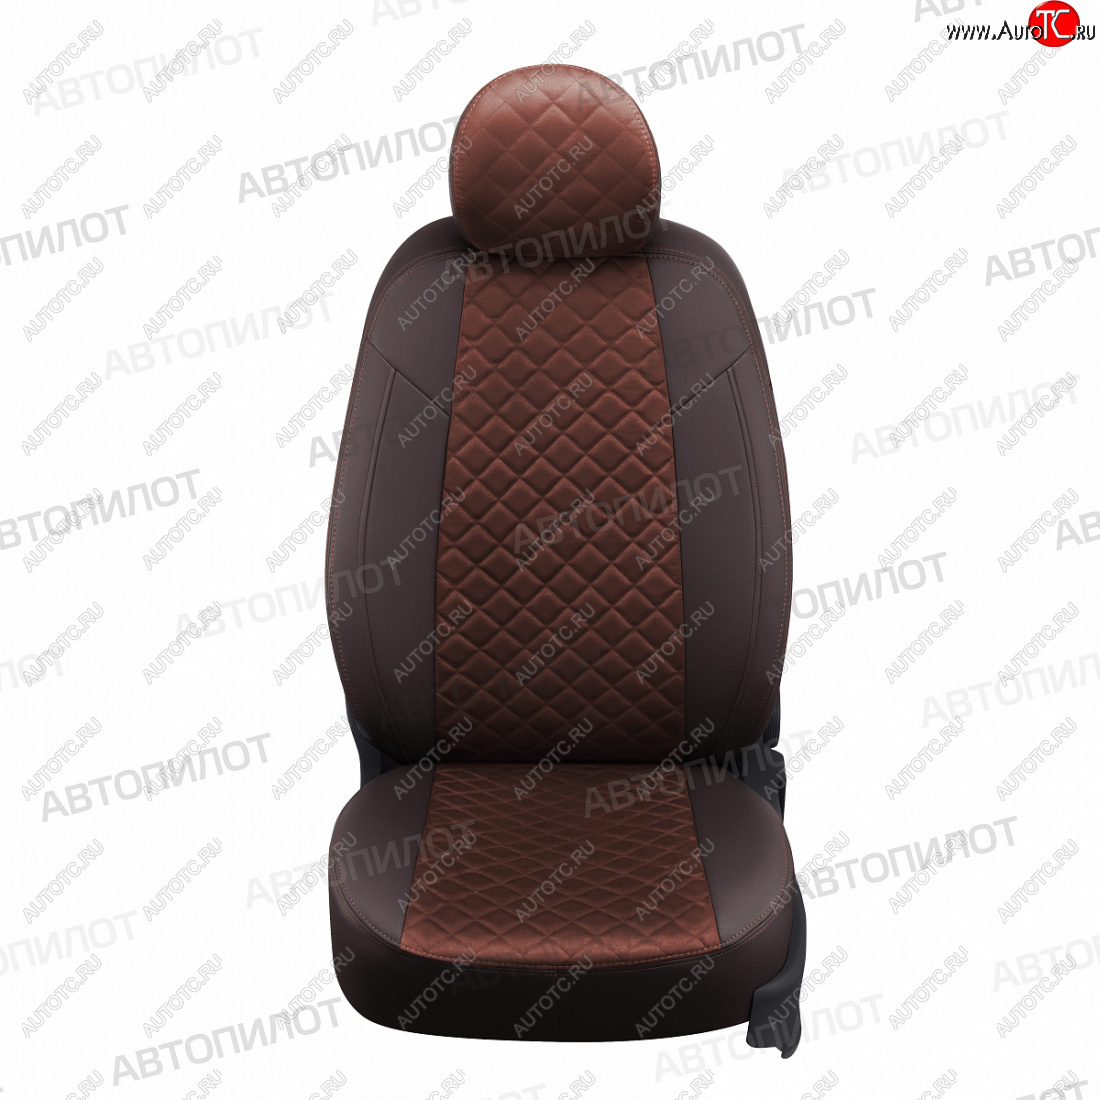 17 549 р. Чехлы сидений (экокожа/алькантара, 7 мест) Автопилот Ромб  Hyundai Trajet (1999-2008) (шоколад)